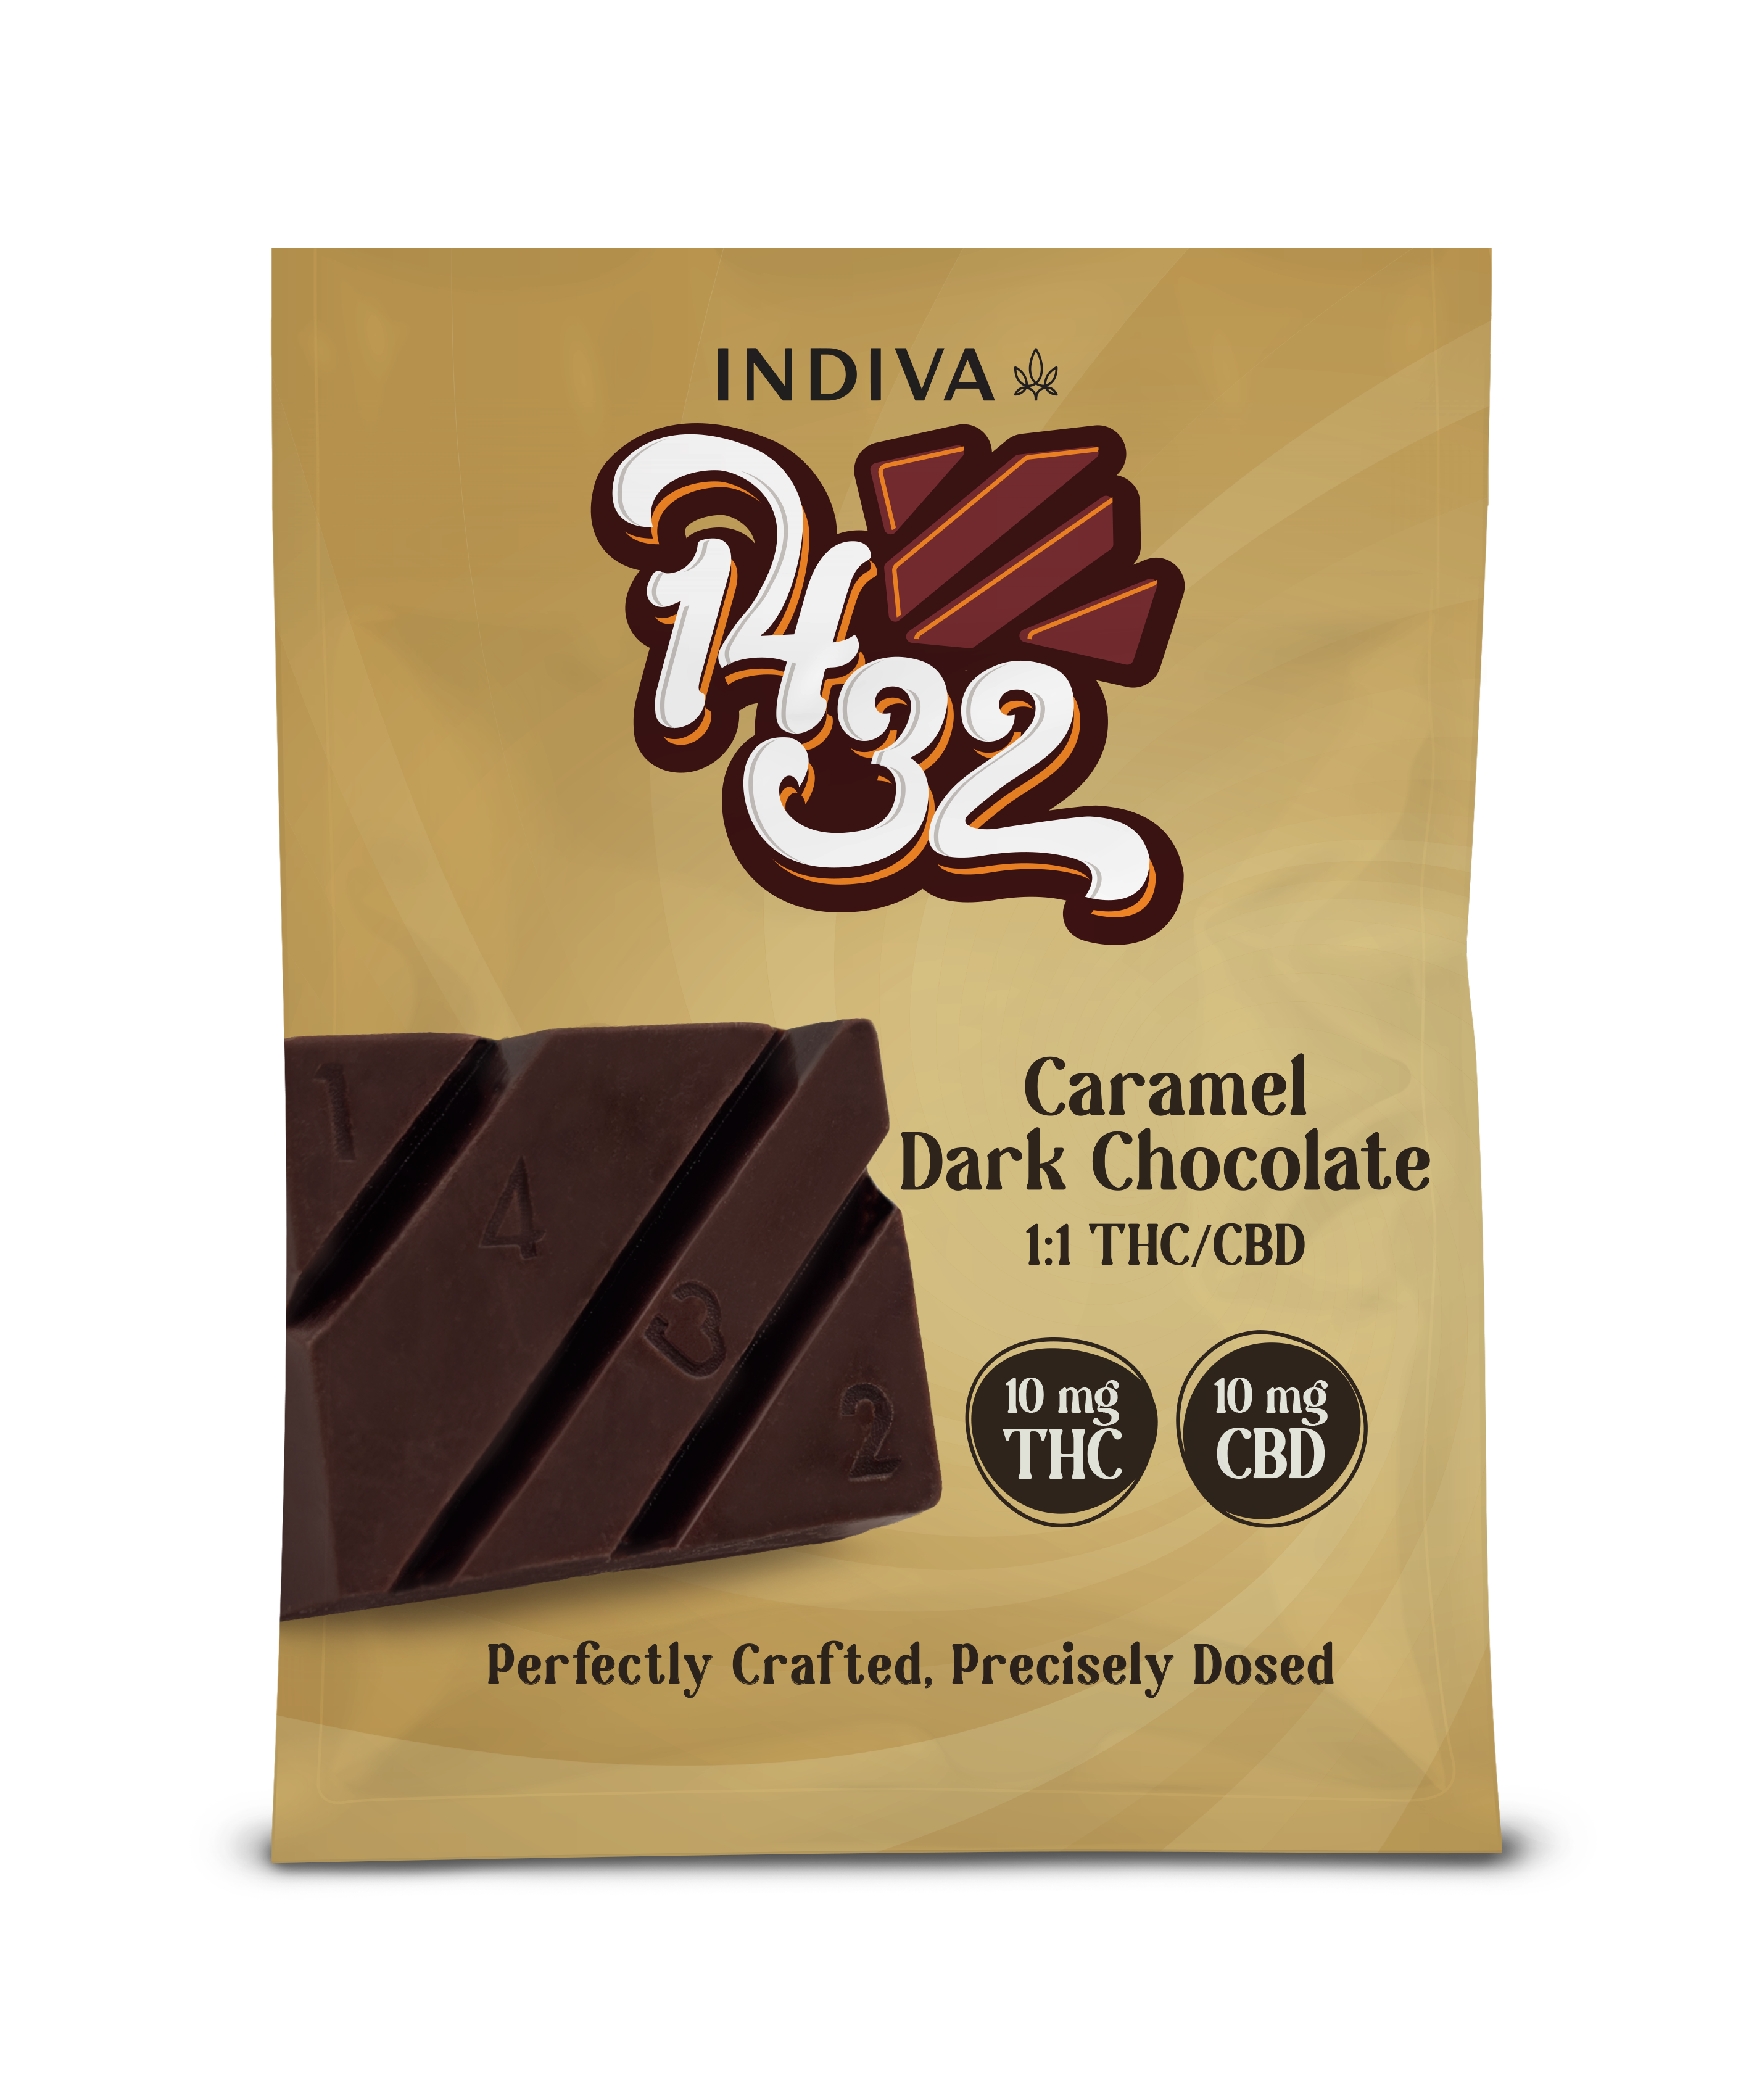 1:1 THC/CBD Caramel Dark Chocolate